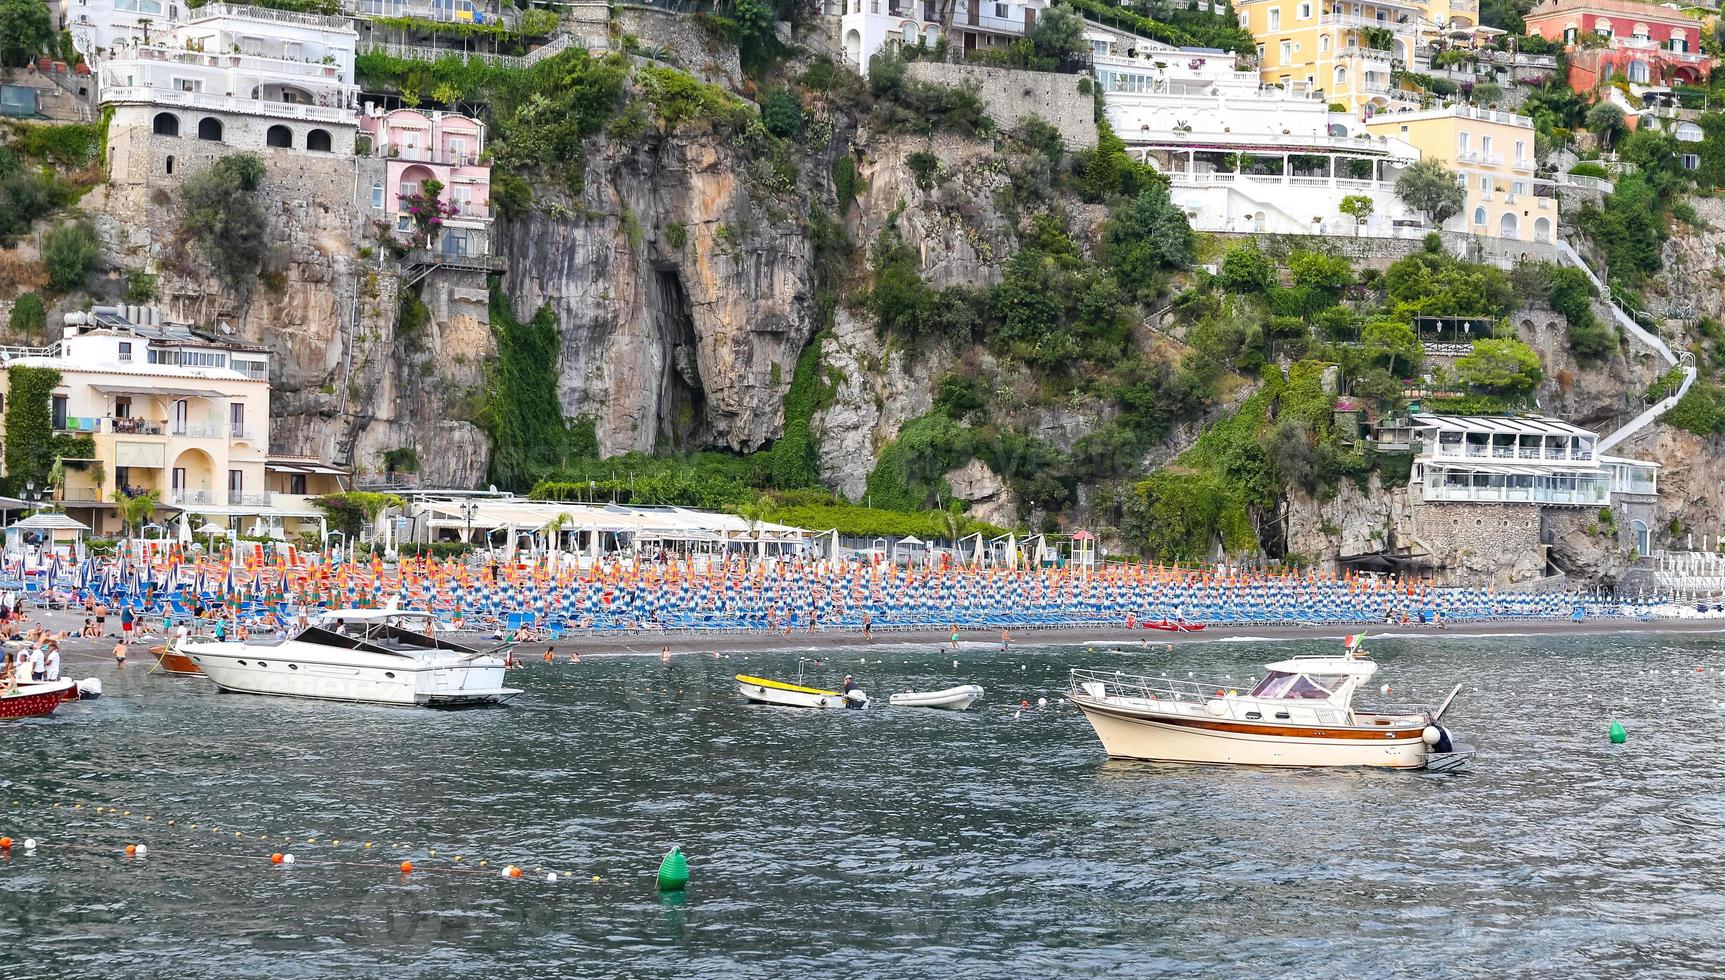 positano strand i amalfikusten, Neapel, Italien foto